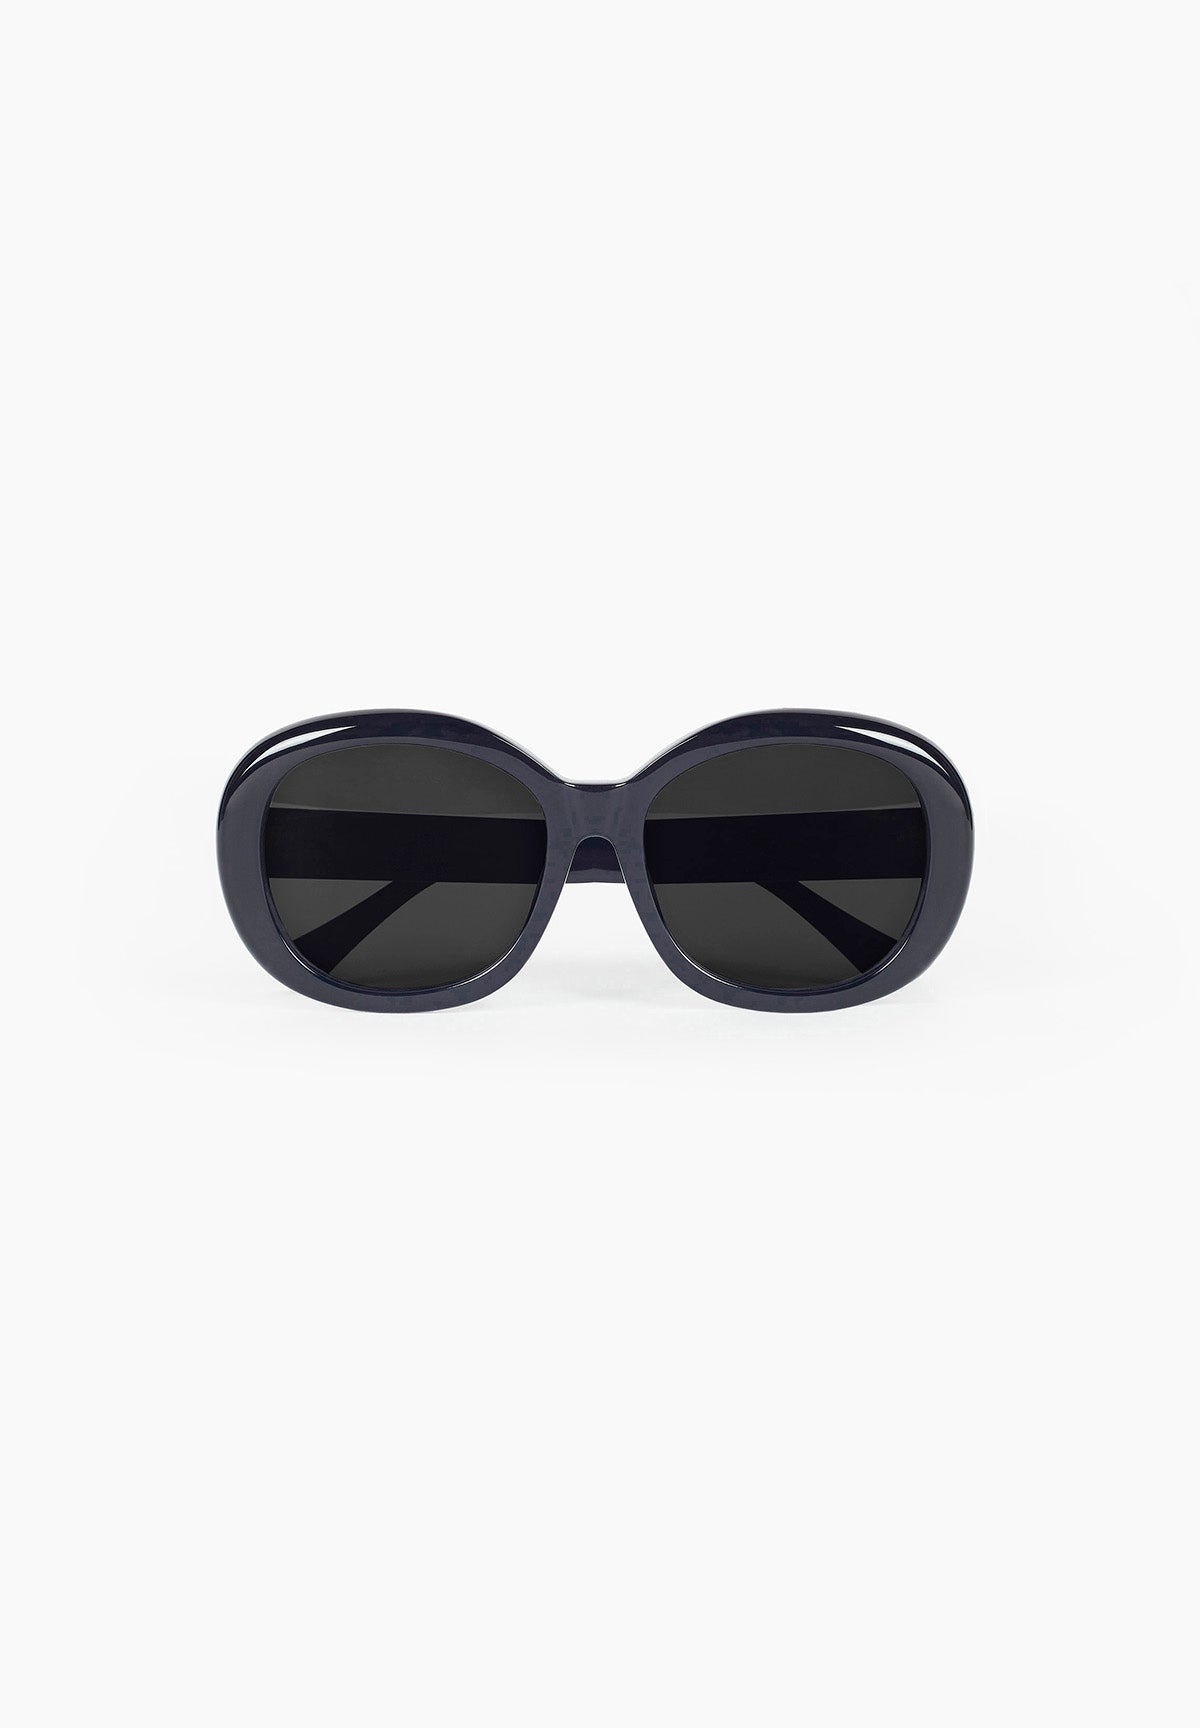 Jeanne sunglasses